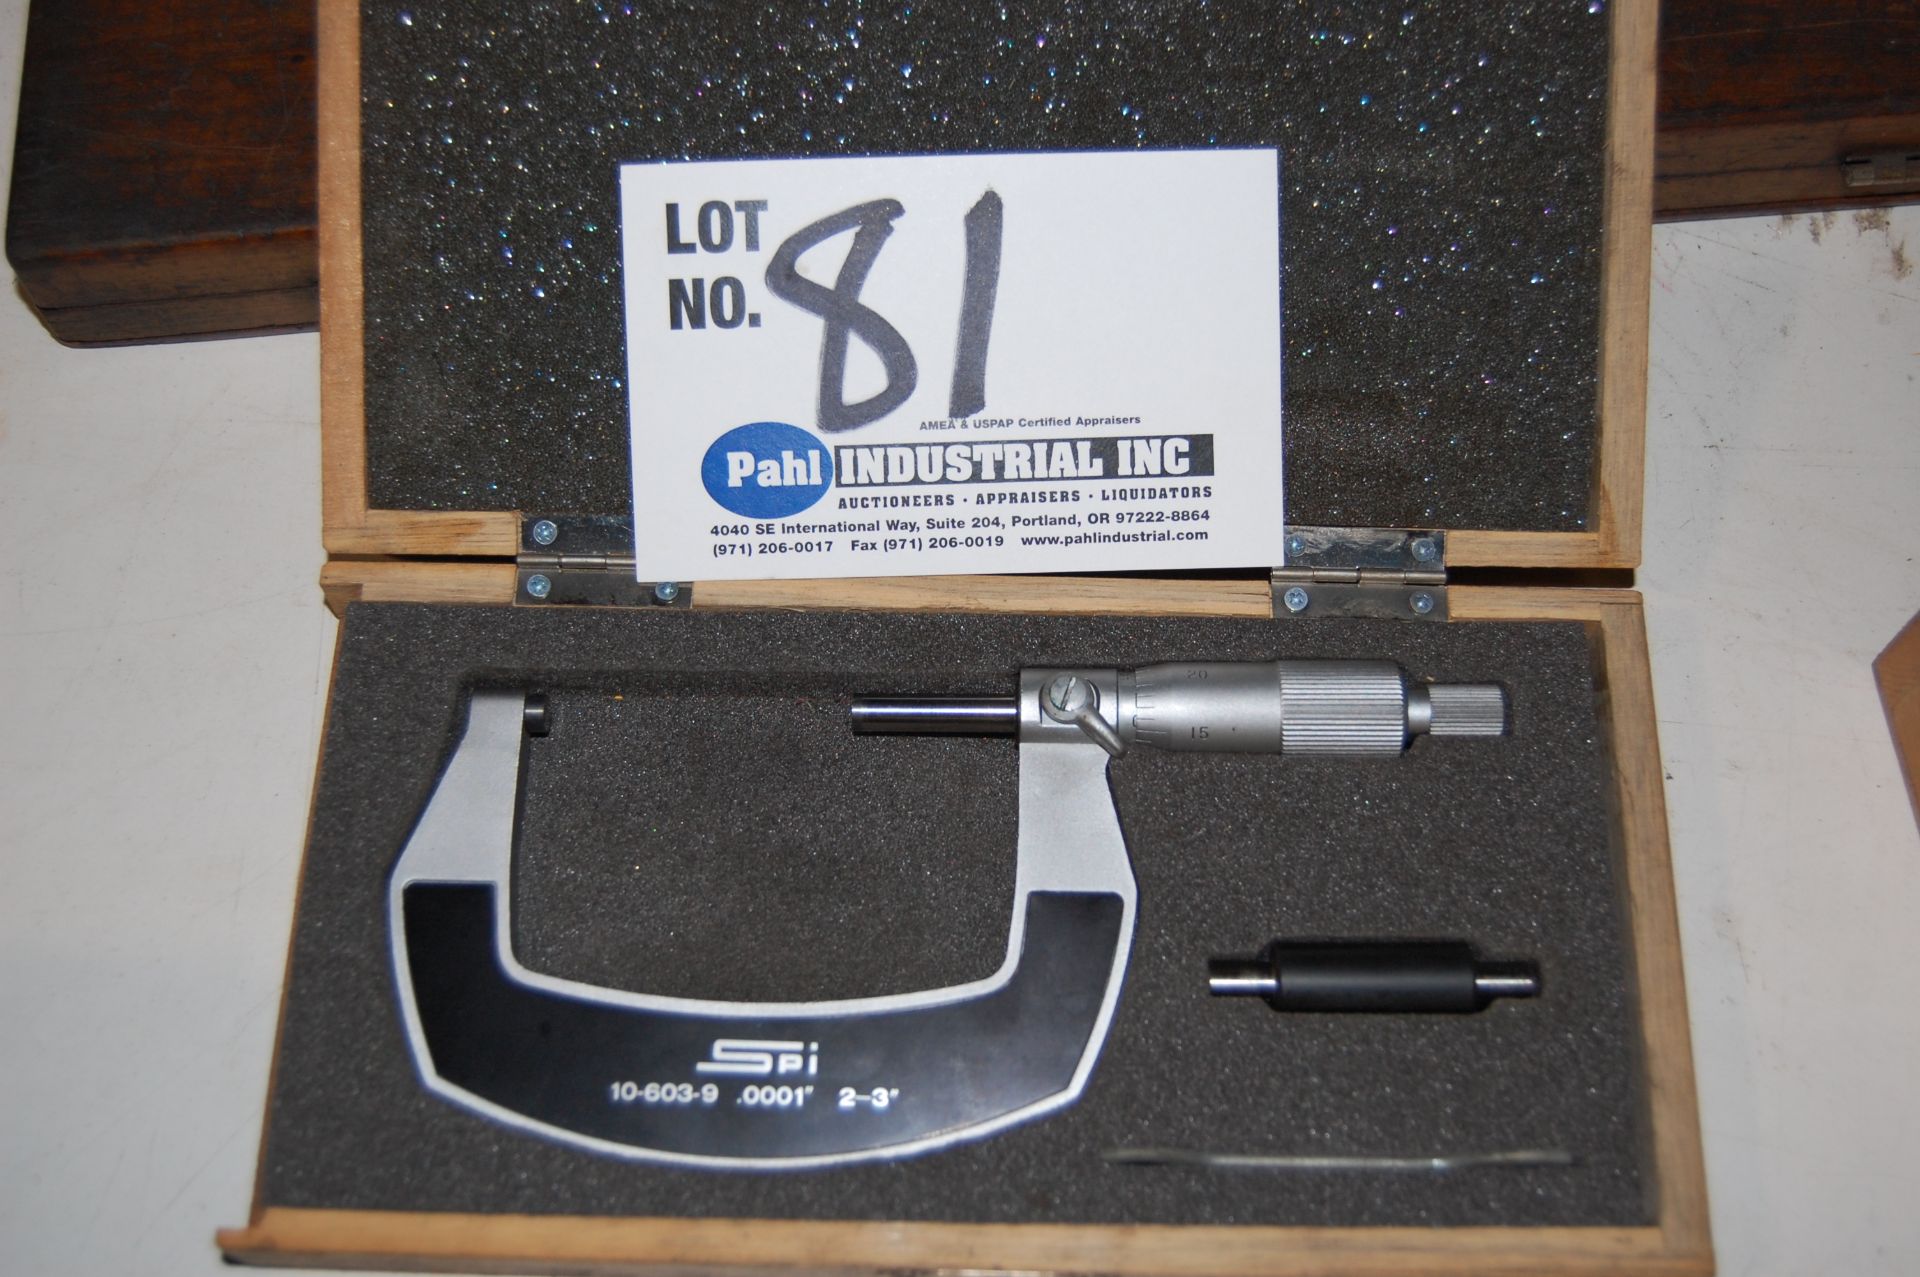 SPI 2-3"" OD Micrometer